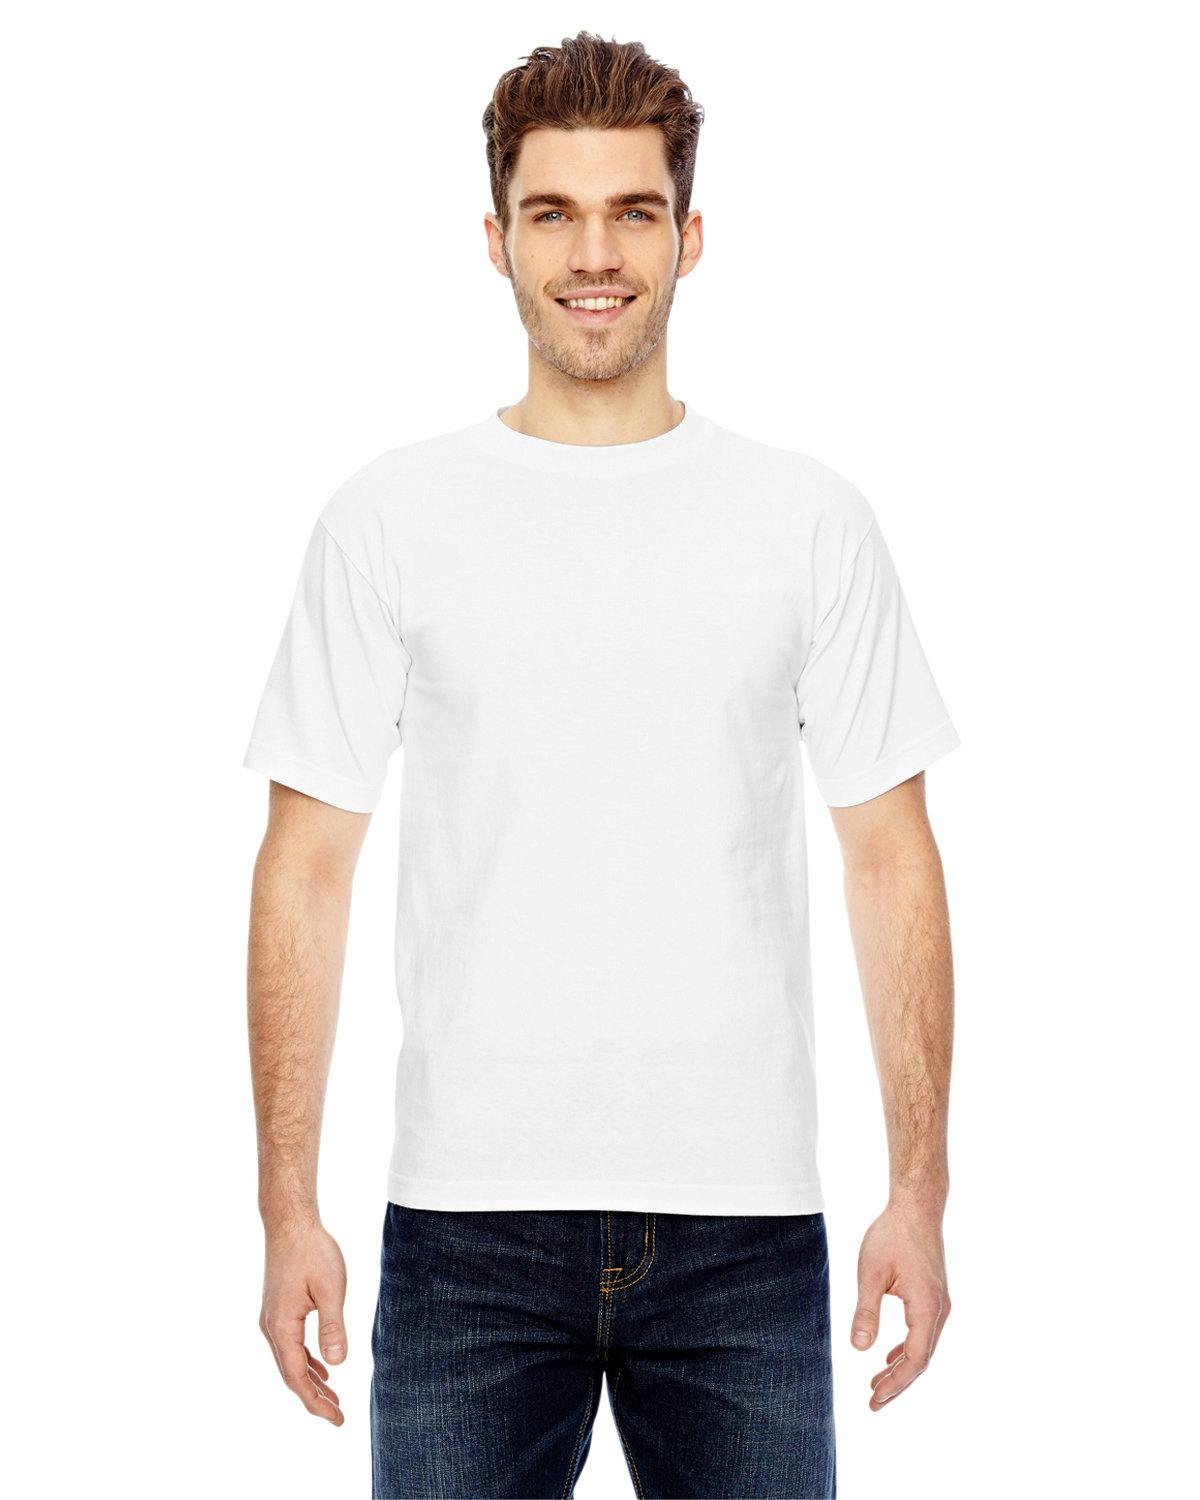 Image for Unisex Heavyweight T-Shirt 